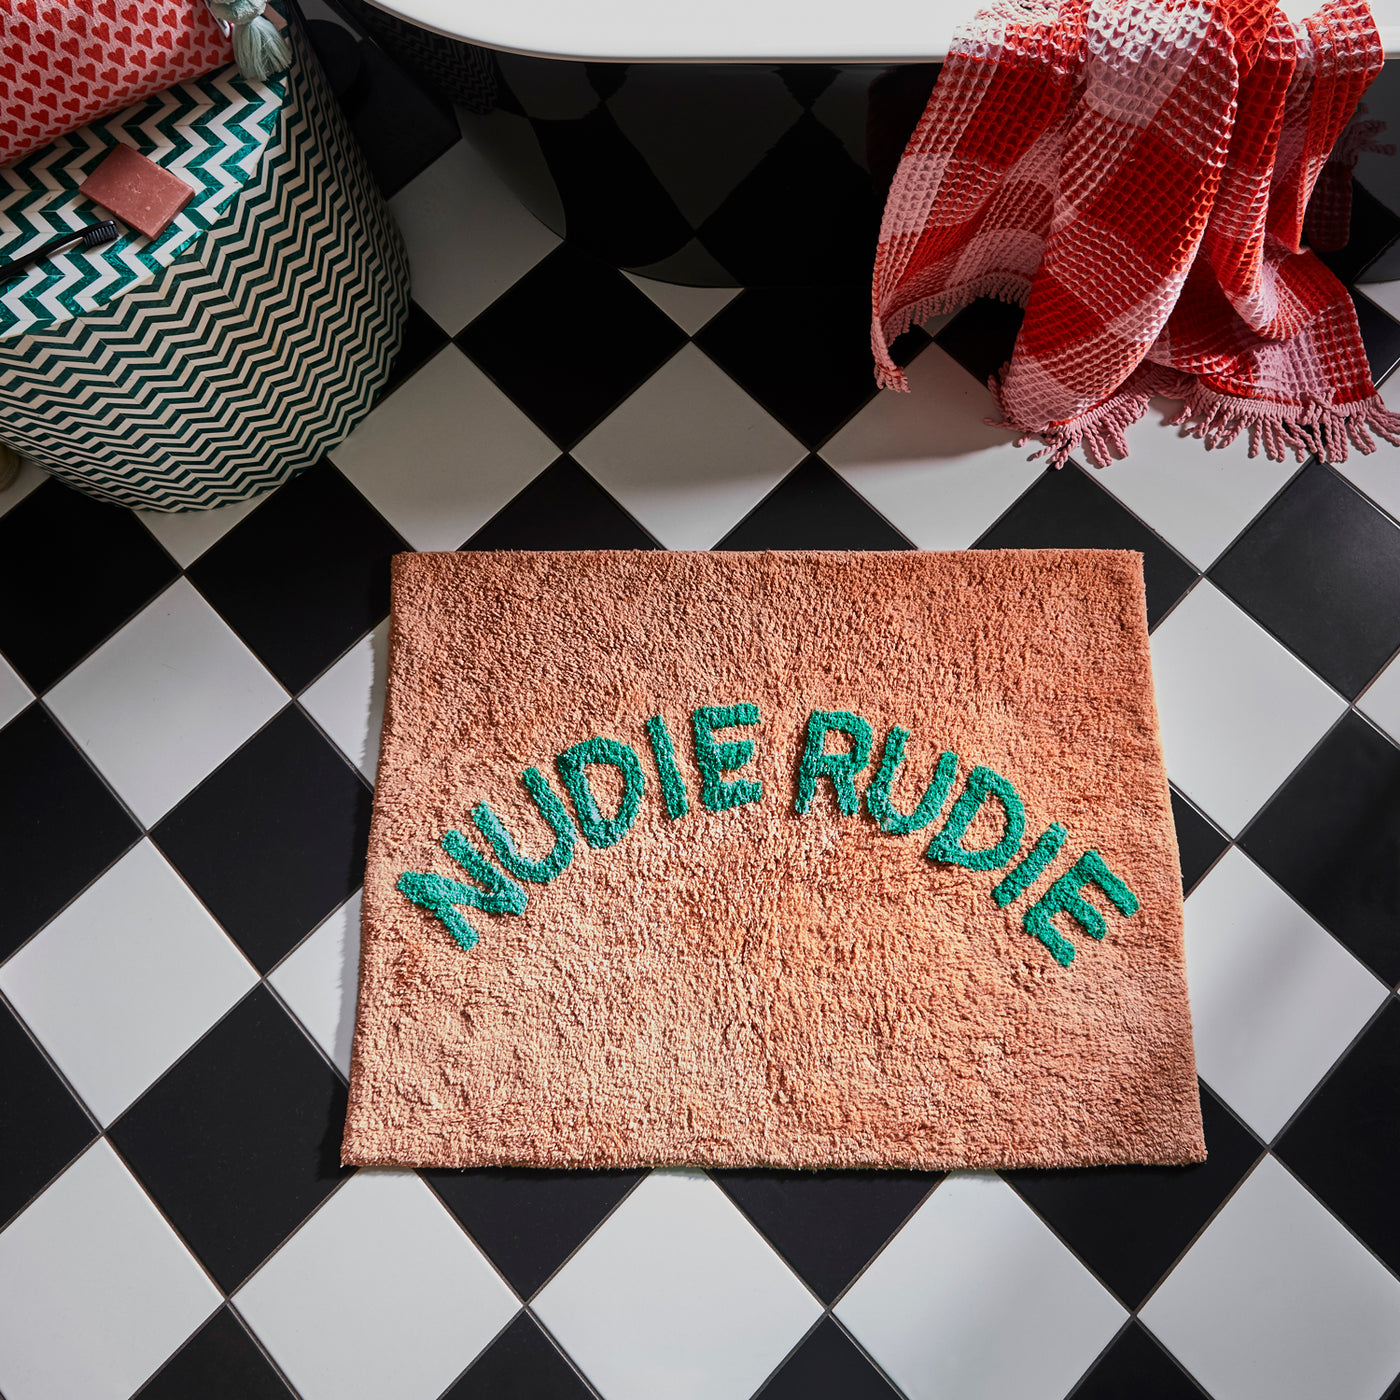 Tula hand tufted nudie rudie bath mat in peach and apple green